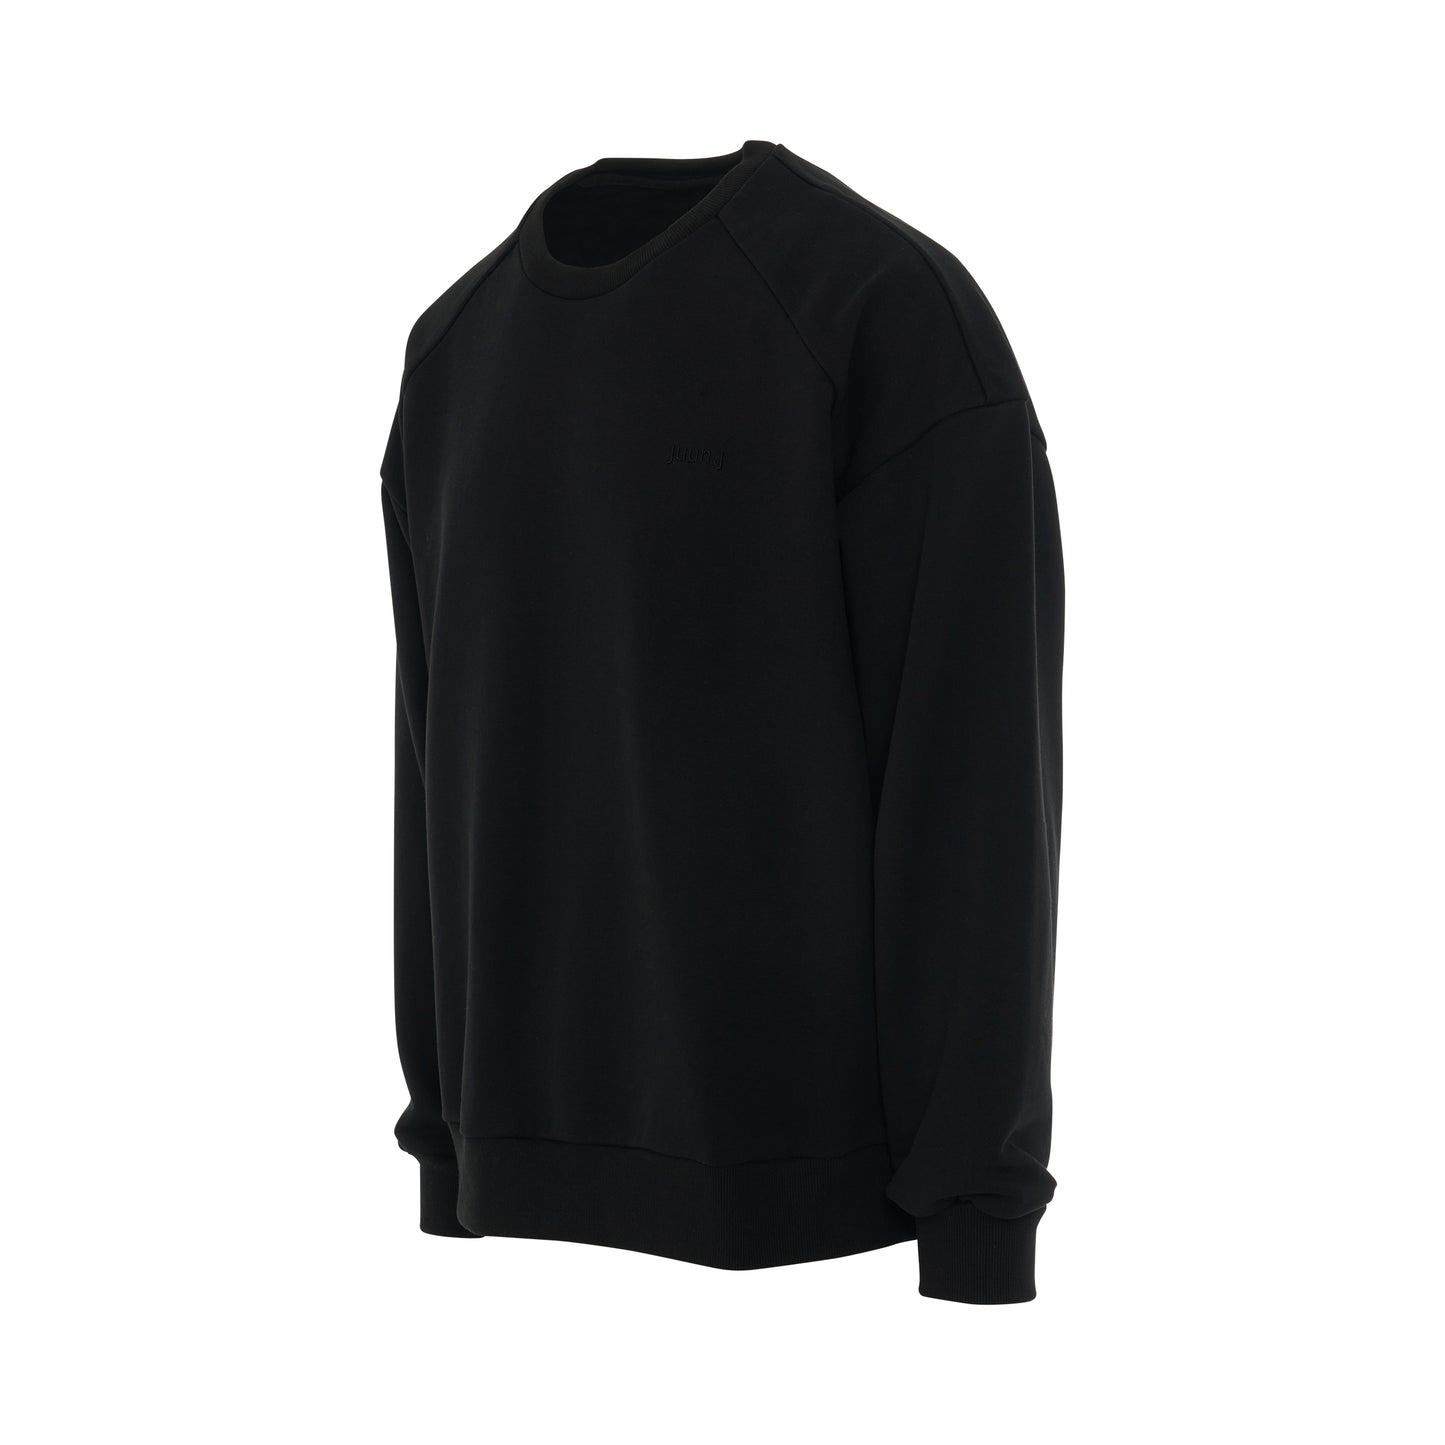 Graphic Loose Fit Sweatshirt in Black